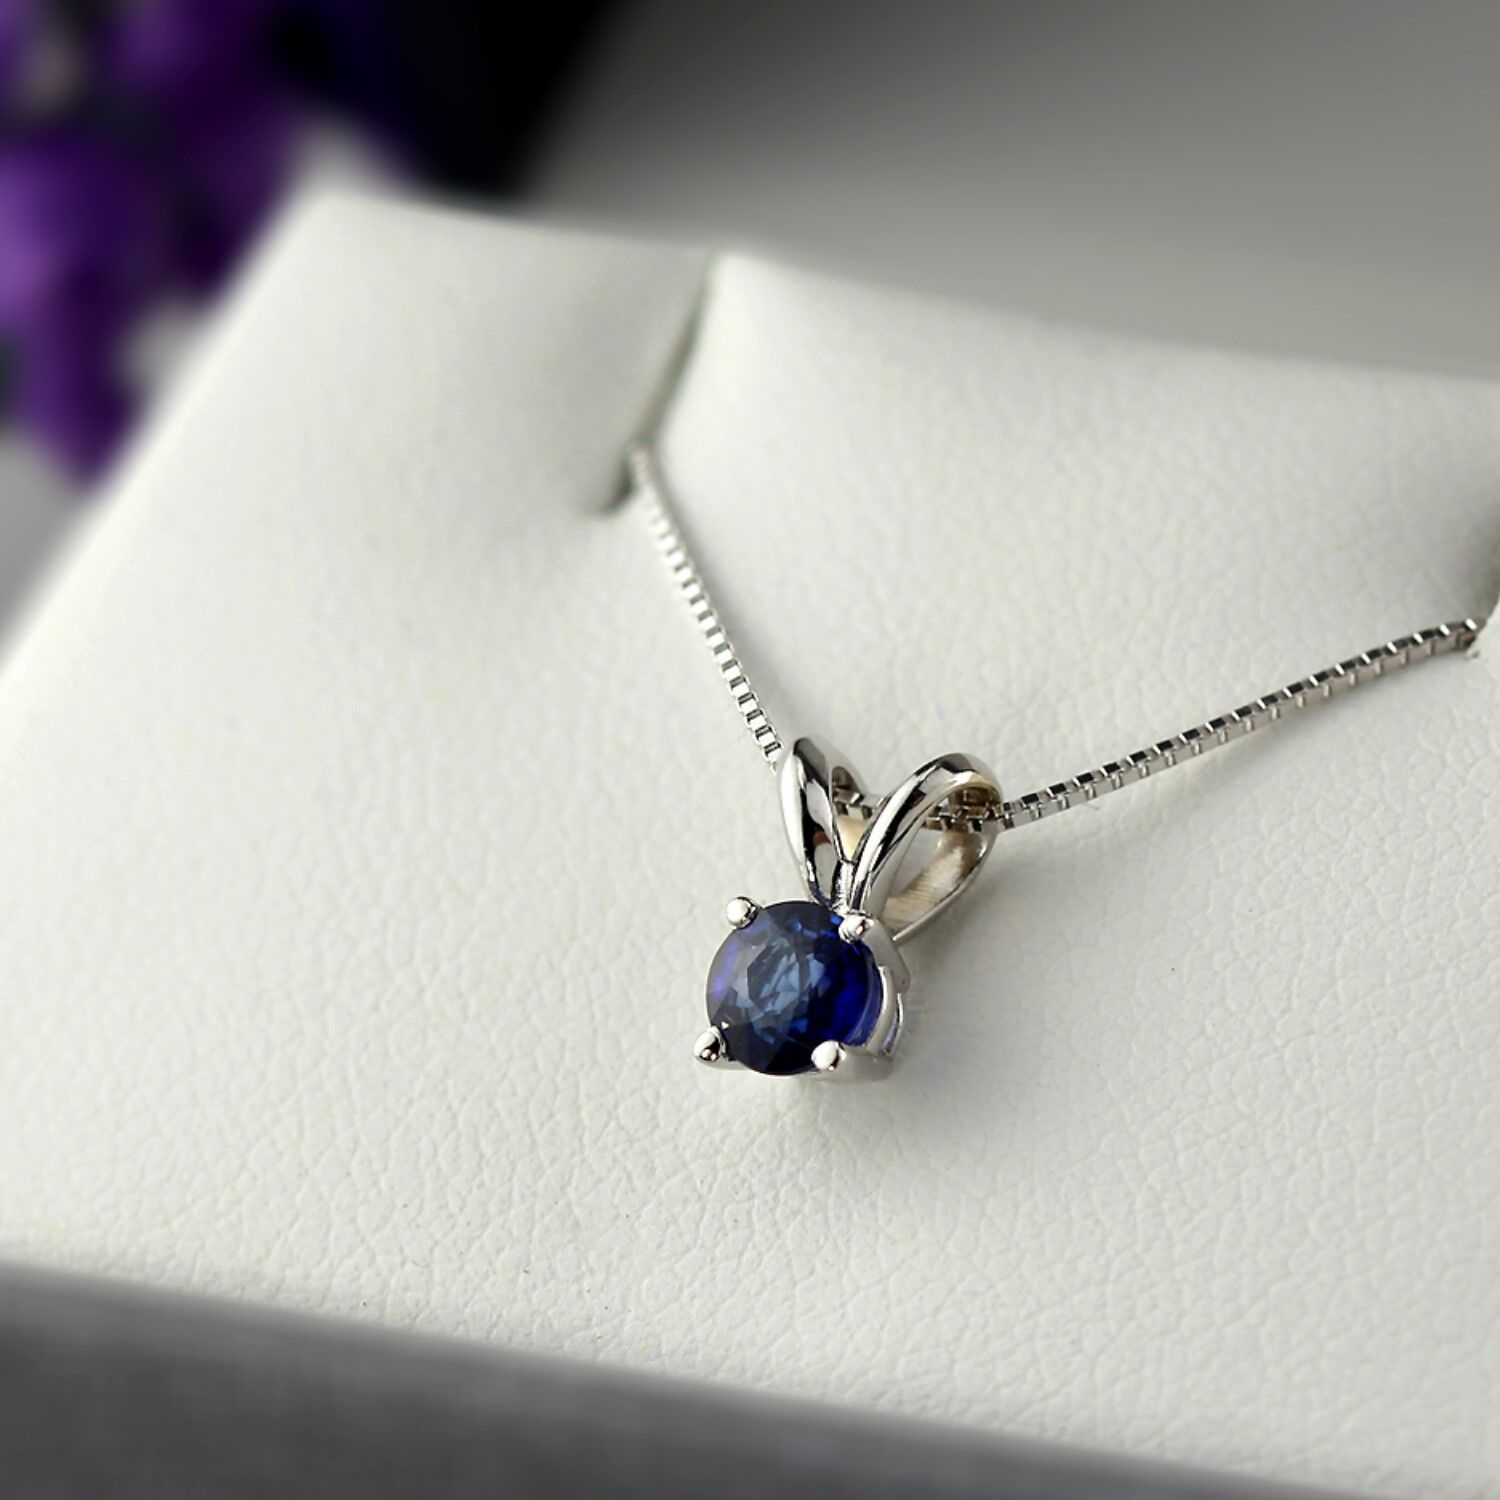 September Stunning Birthstone: Sapphire Gemstone Jewelry- DiamondStuds News